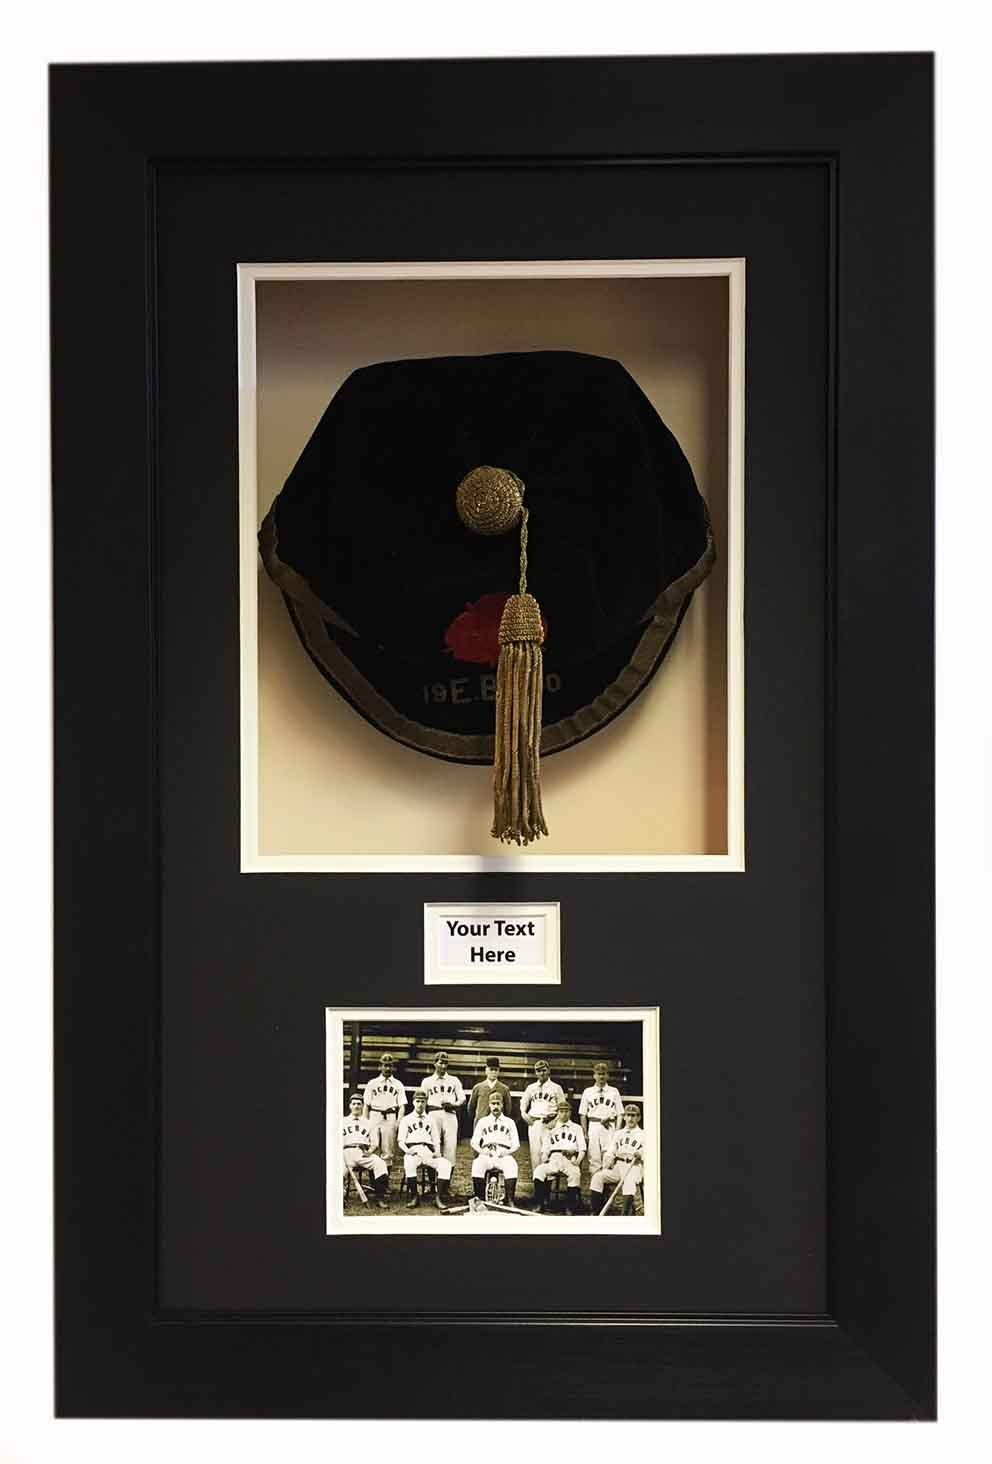 MEMORABILIA/3D DISPLAY CASE VINTAGE ENGLAND INTERNATIONAL BASEBALL CAP 1930